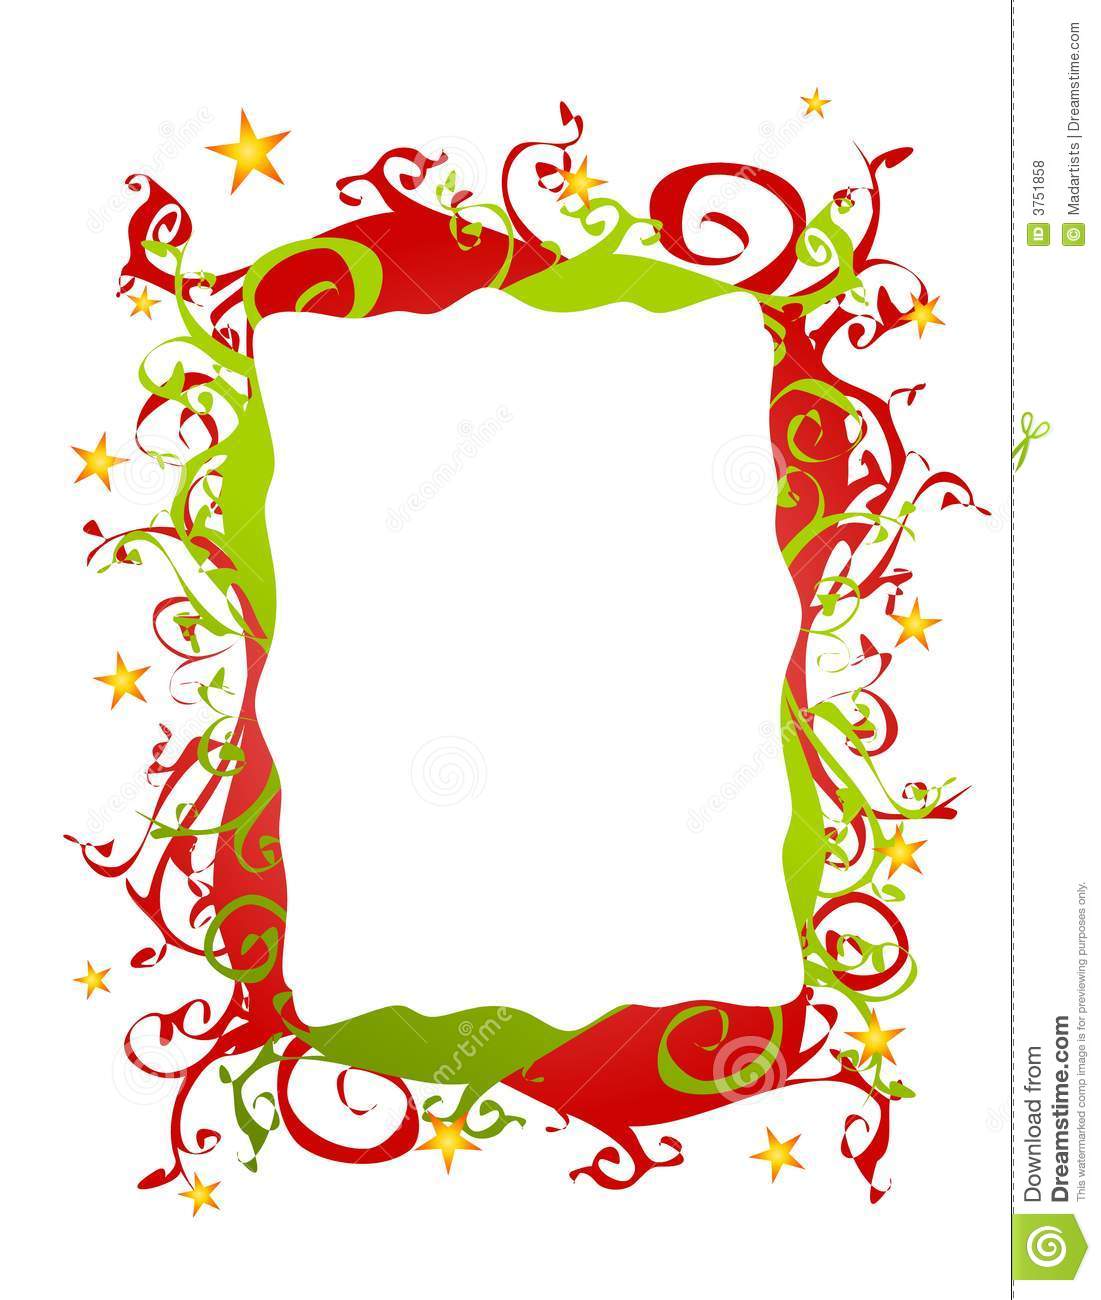 christmas borders clip art . - Free Christmas Borders Clip Art